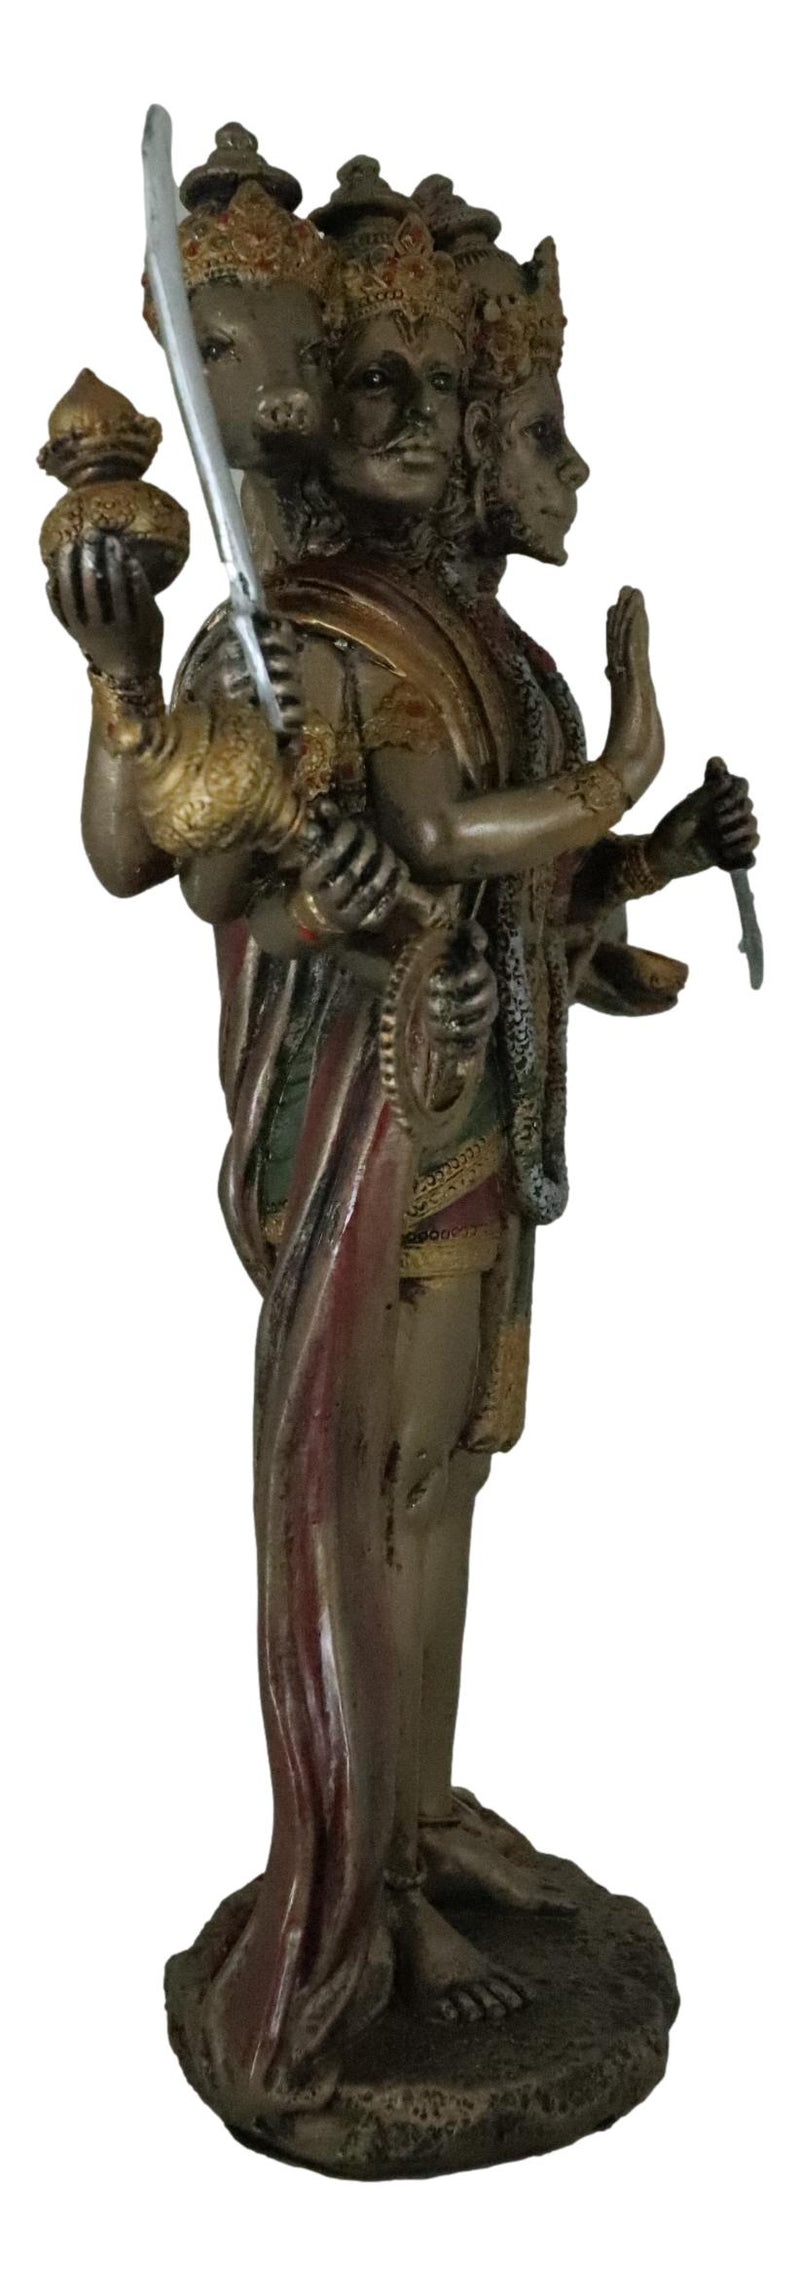 Panchamukhi Anjaneya Five Faced Hanuman Statue Monkey Hindu God Warrior Figurine